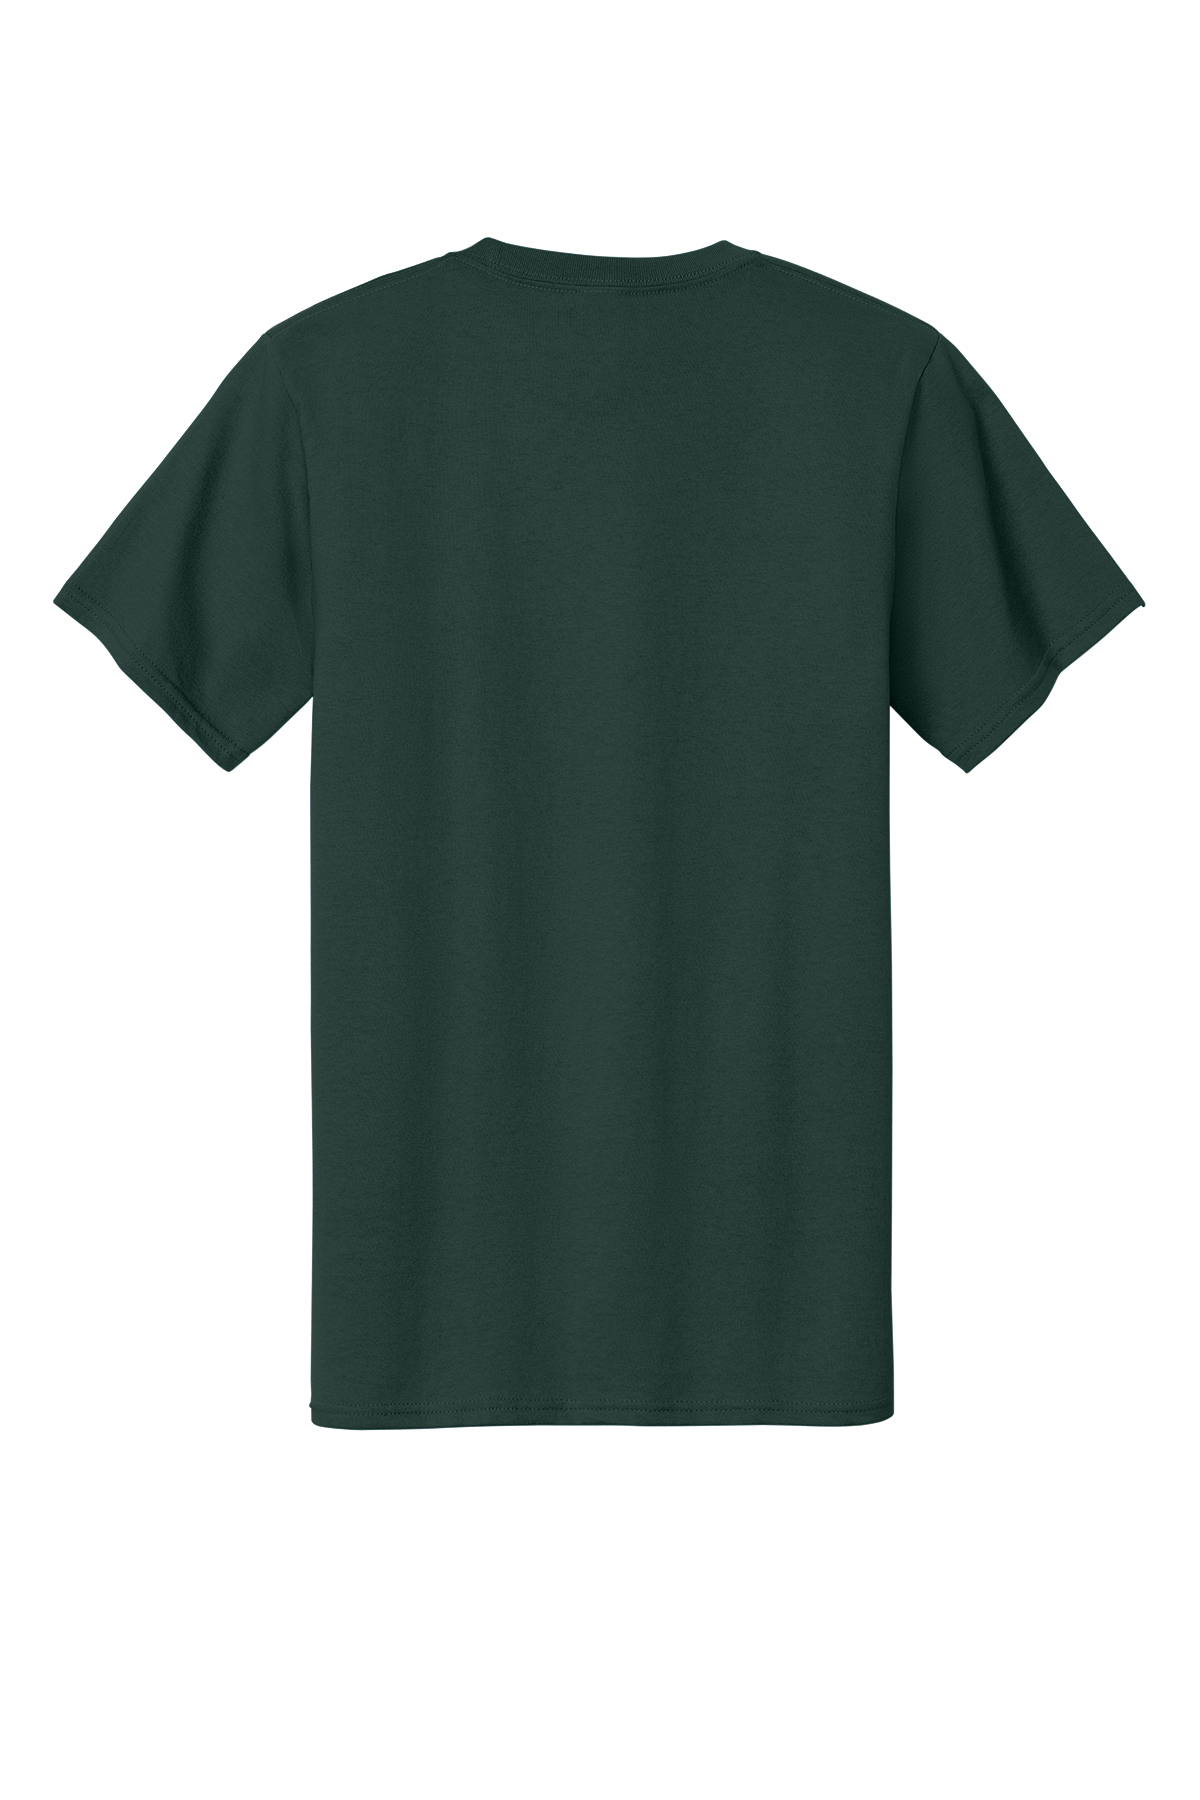 Dark green t-shirt